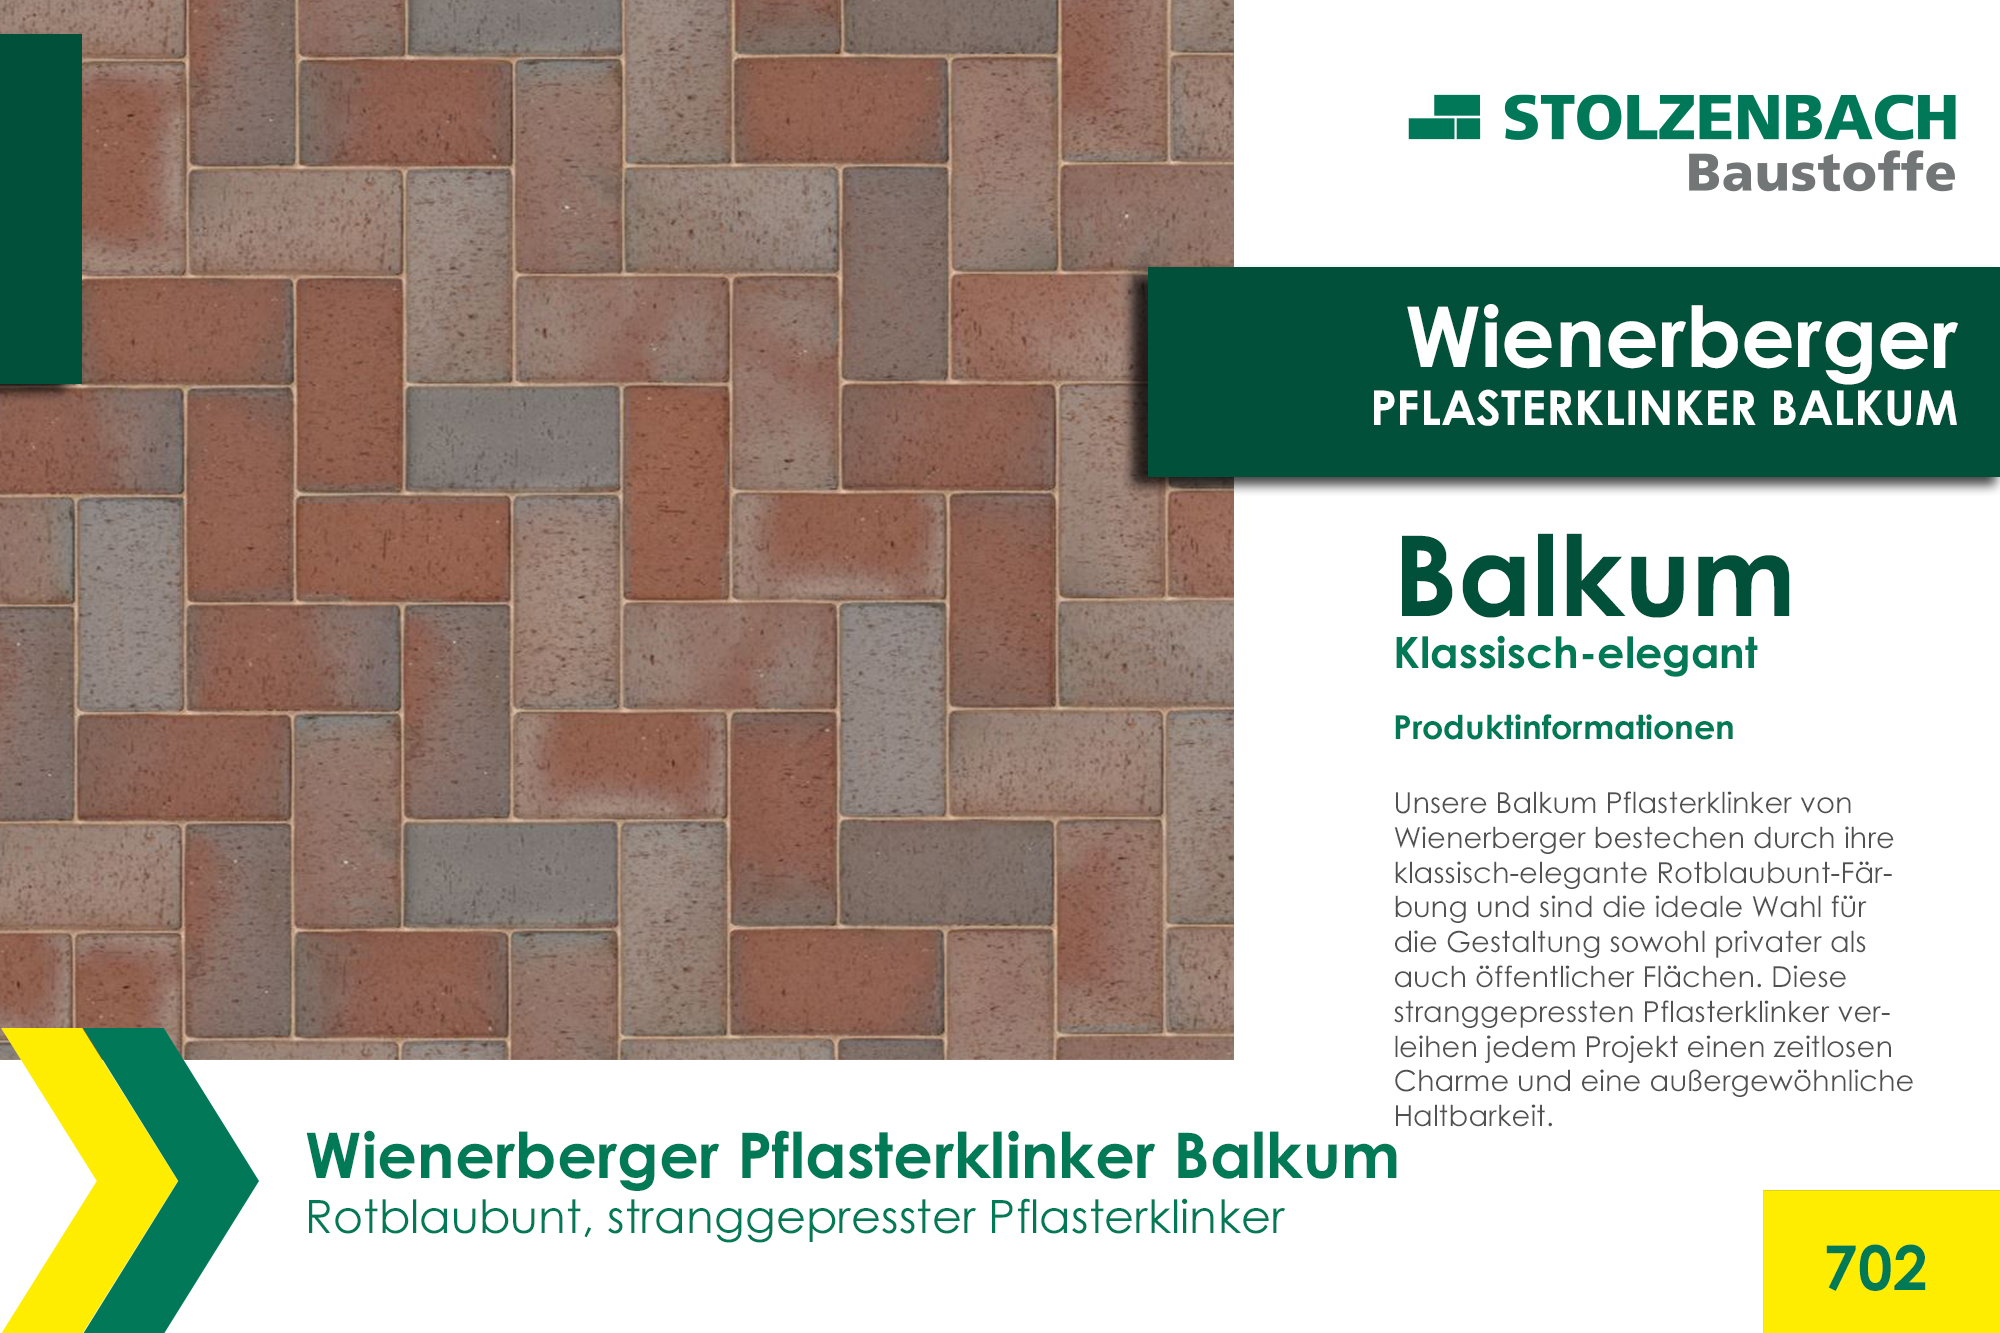 Balkum Pflasterklinker bei Stolzenbach Baustoffe in Bremen